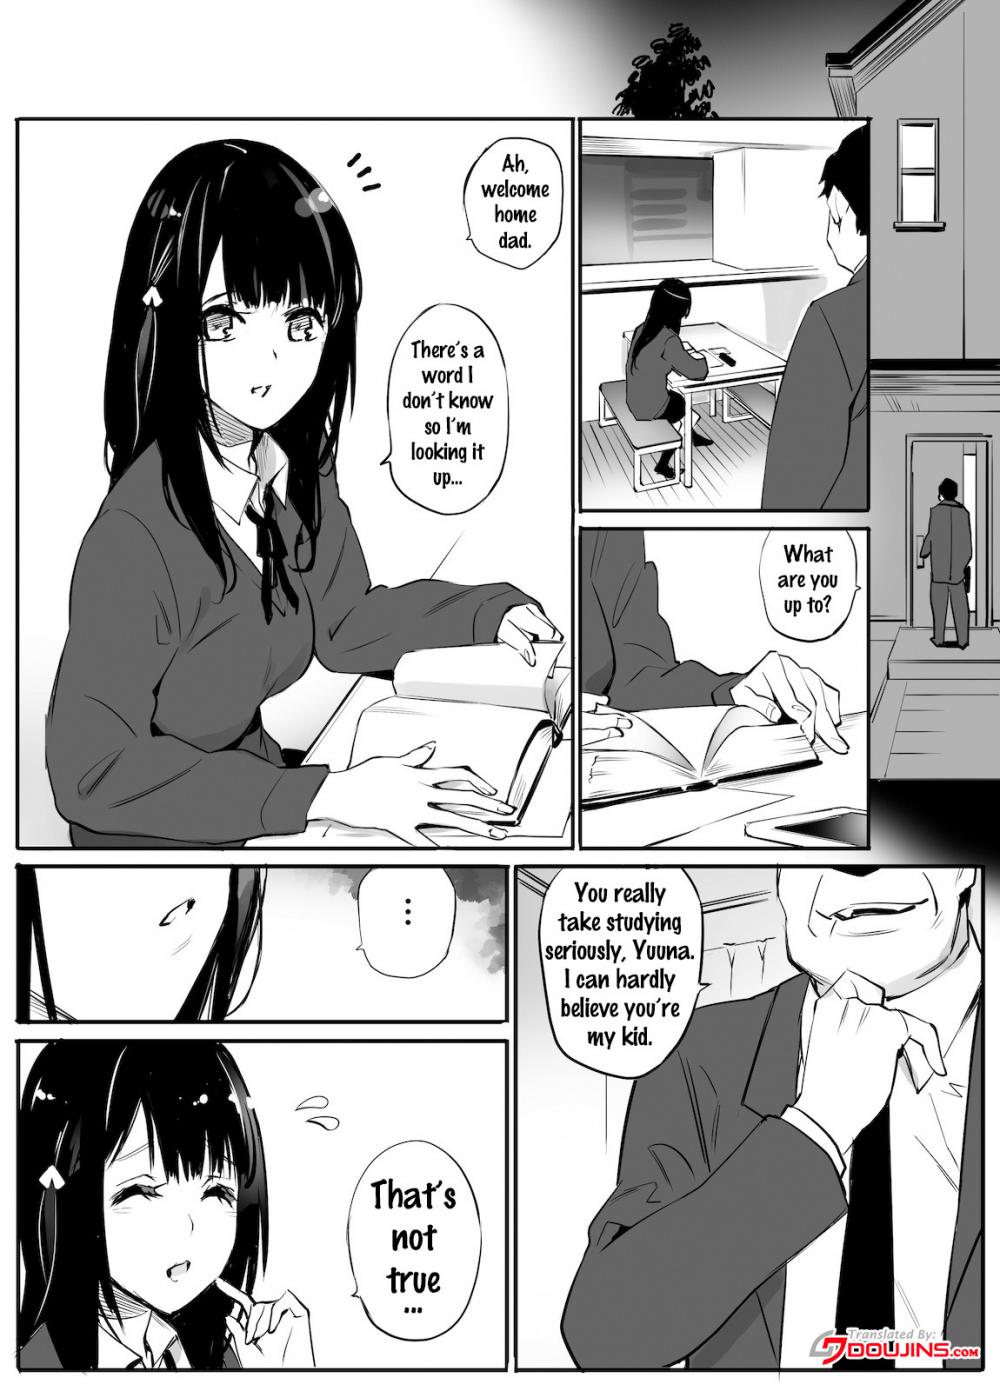 Hentai Manga Comic-My Sex Partner Is... Dad!?-Read-2